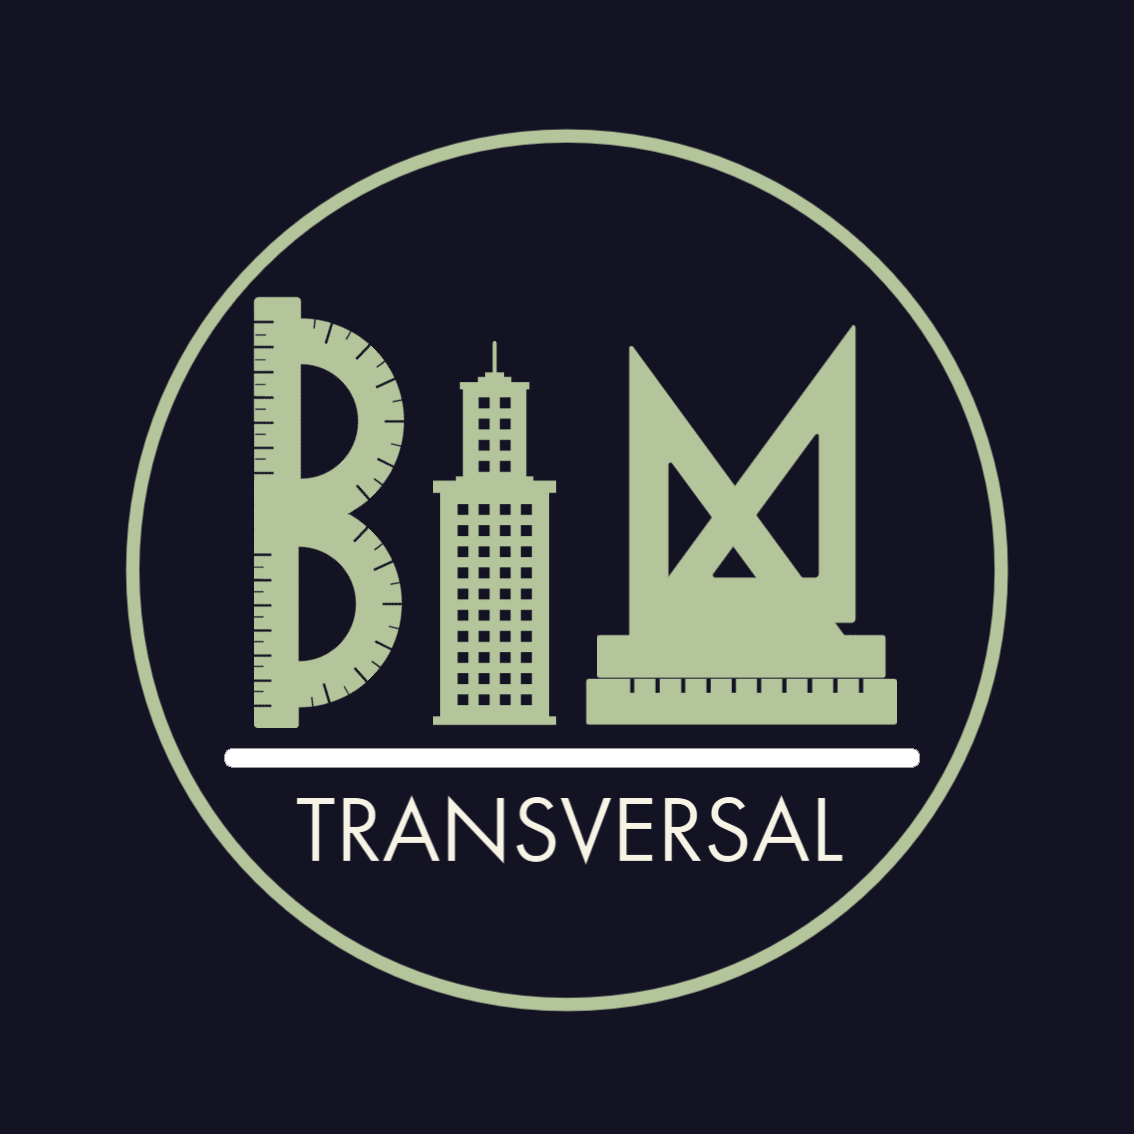 Transversal BIM Knowledge for Higher Education